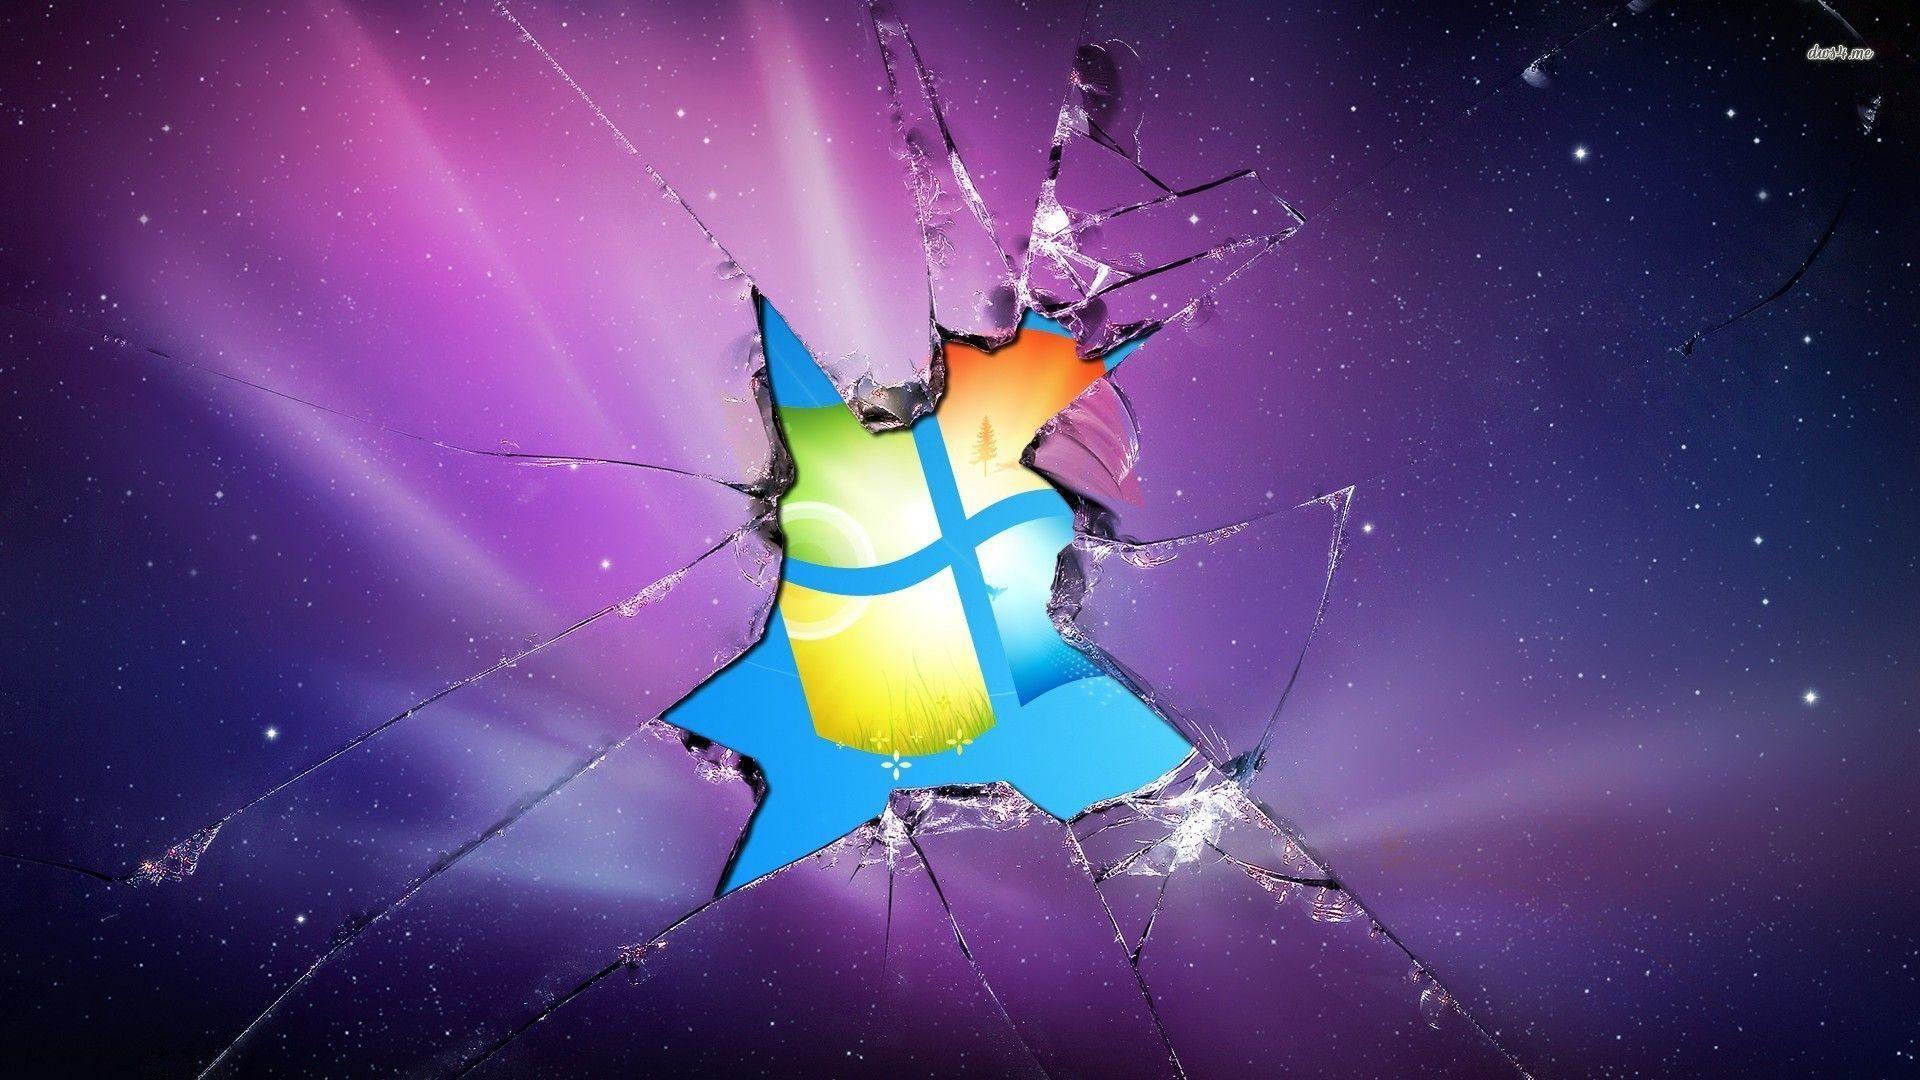 Wallpaper For > Windows 7 Broken Glass Background